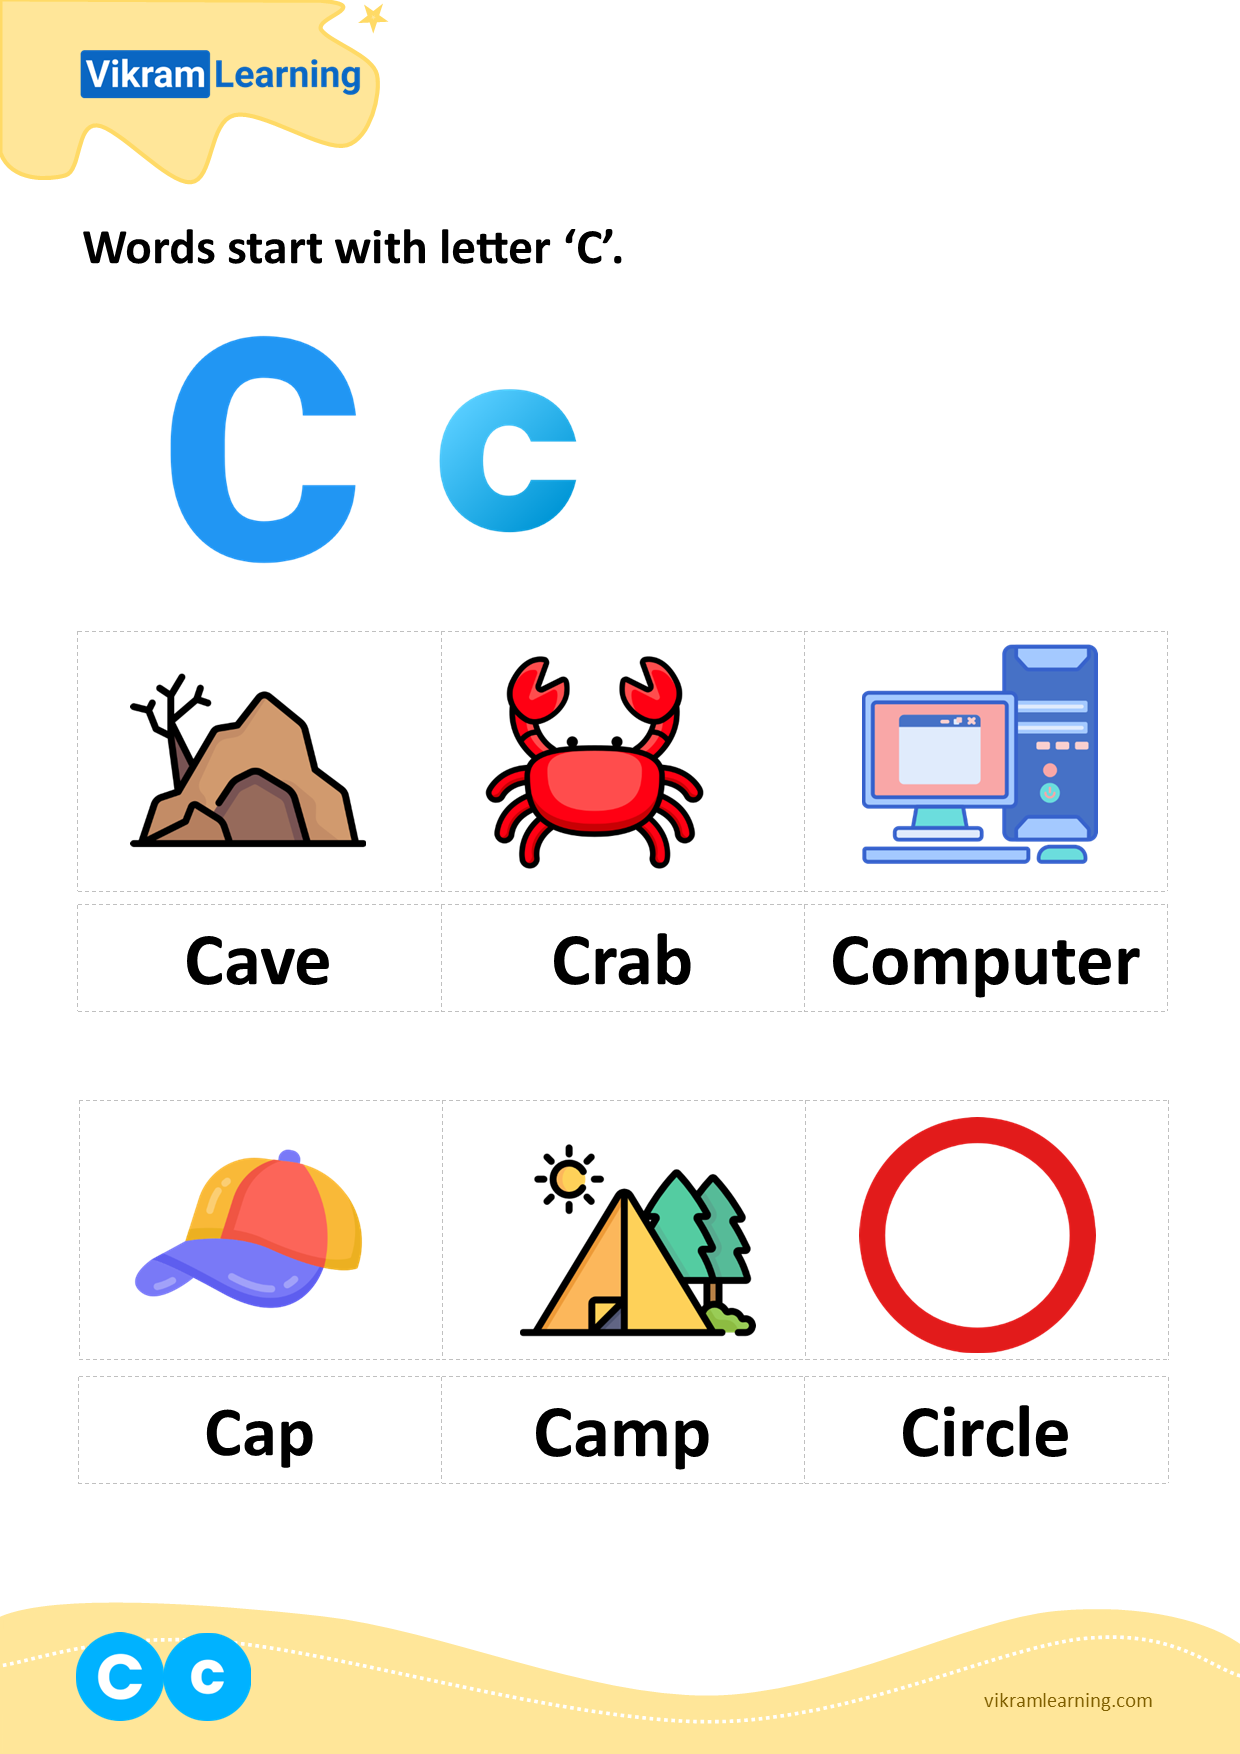 Download words start with letter 'c' worksheets